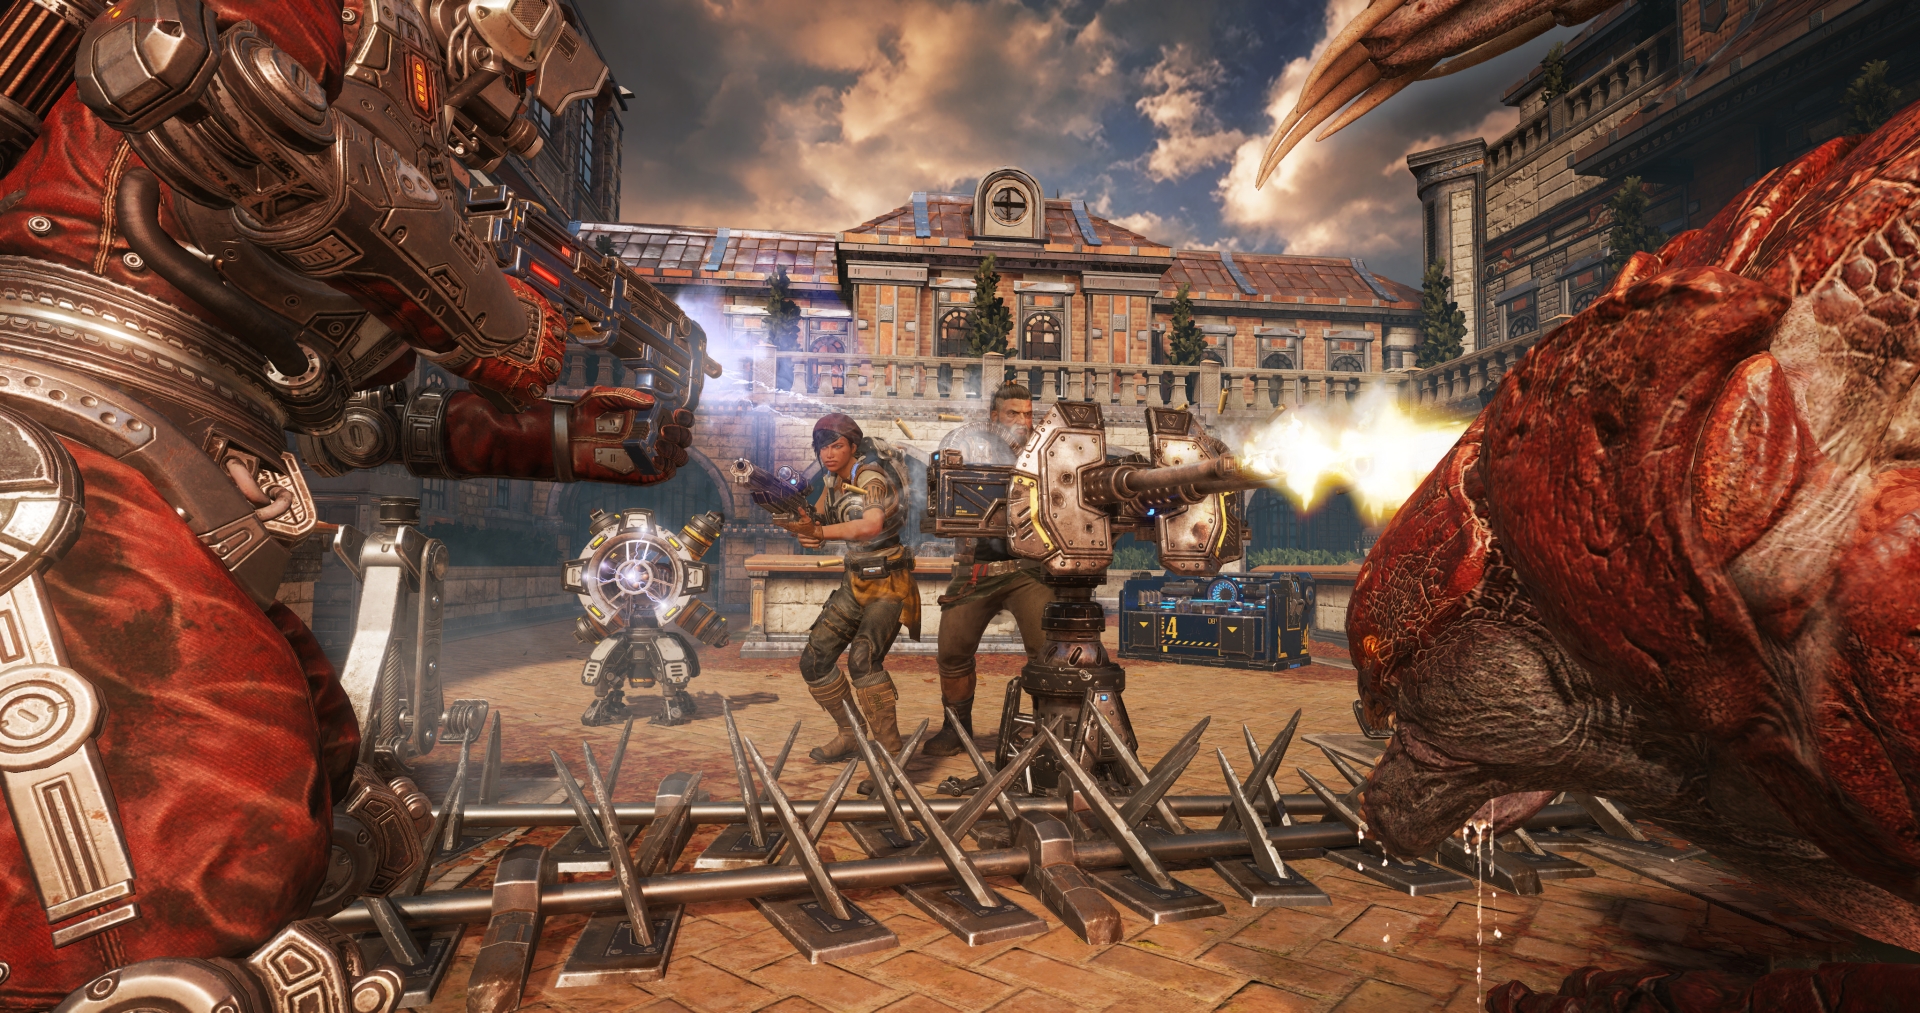 Gears of War 4's Horde Mode is a hyper-violent take on tower defense